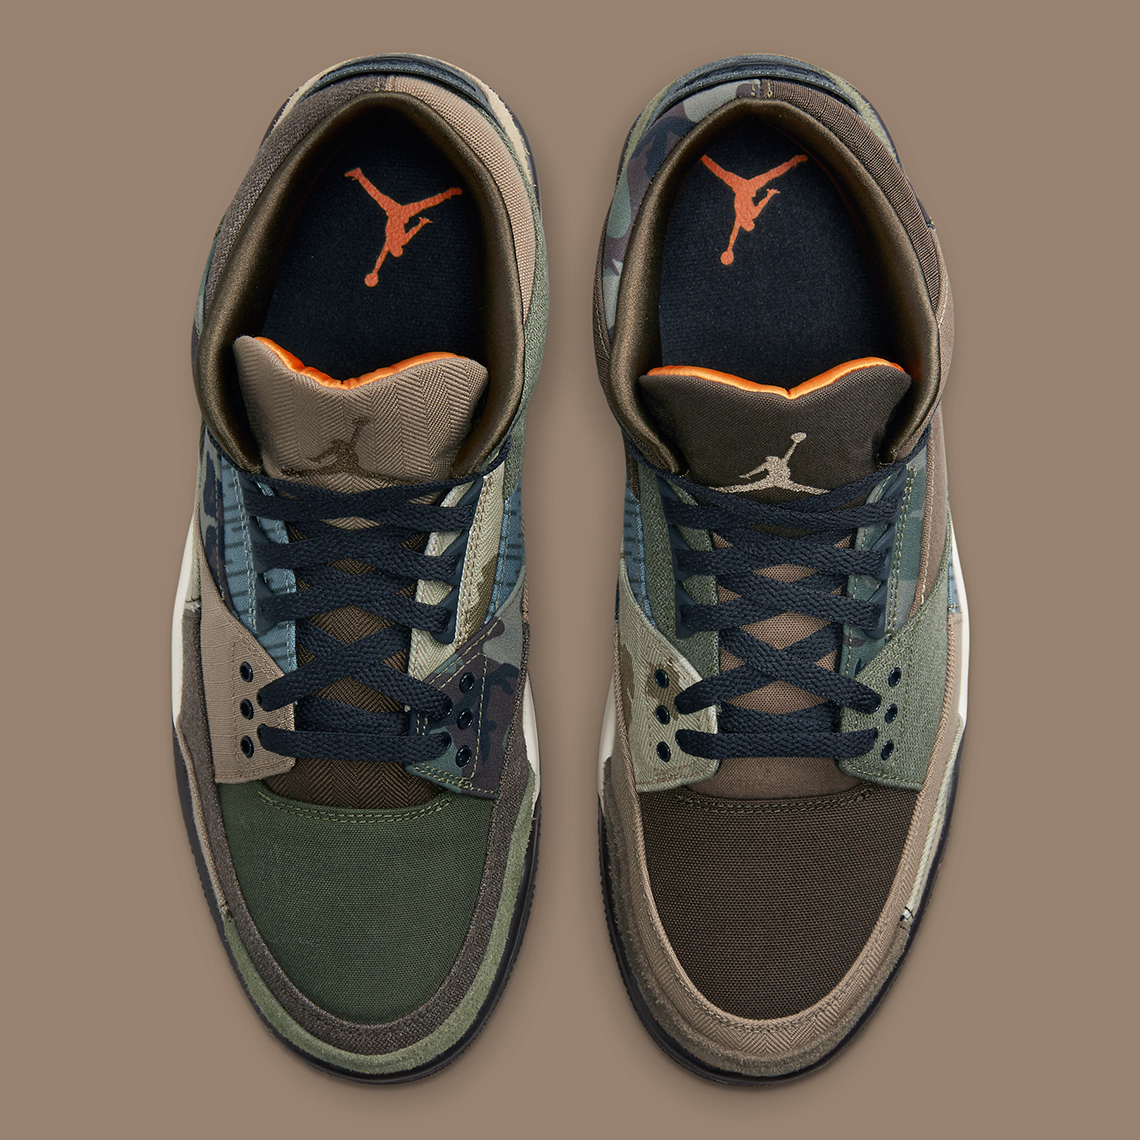 Jordan 3 Retro Patchwork Camo : r/Sneakers